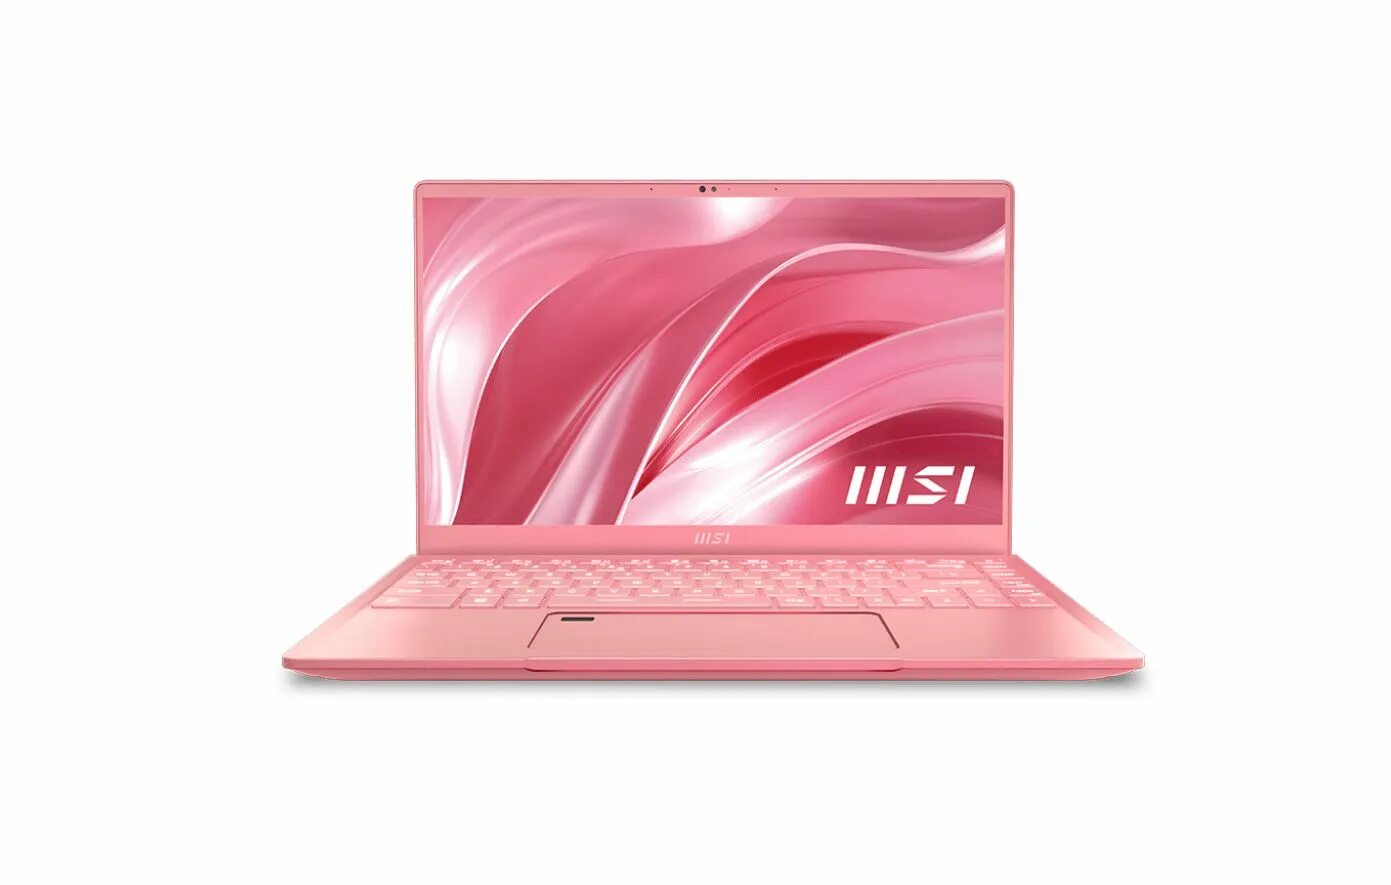 Ноутбук MSI Prestige 14. MSI Prestige 14 Pink. 14" Ультрабук MSI Prestige 14 a11sb-639ru розовый. MSI Prestige 14 a10sc. Купить ноутбук челны